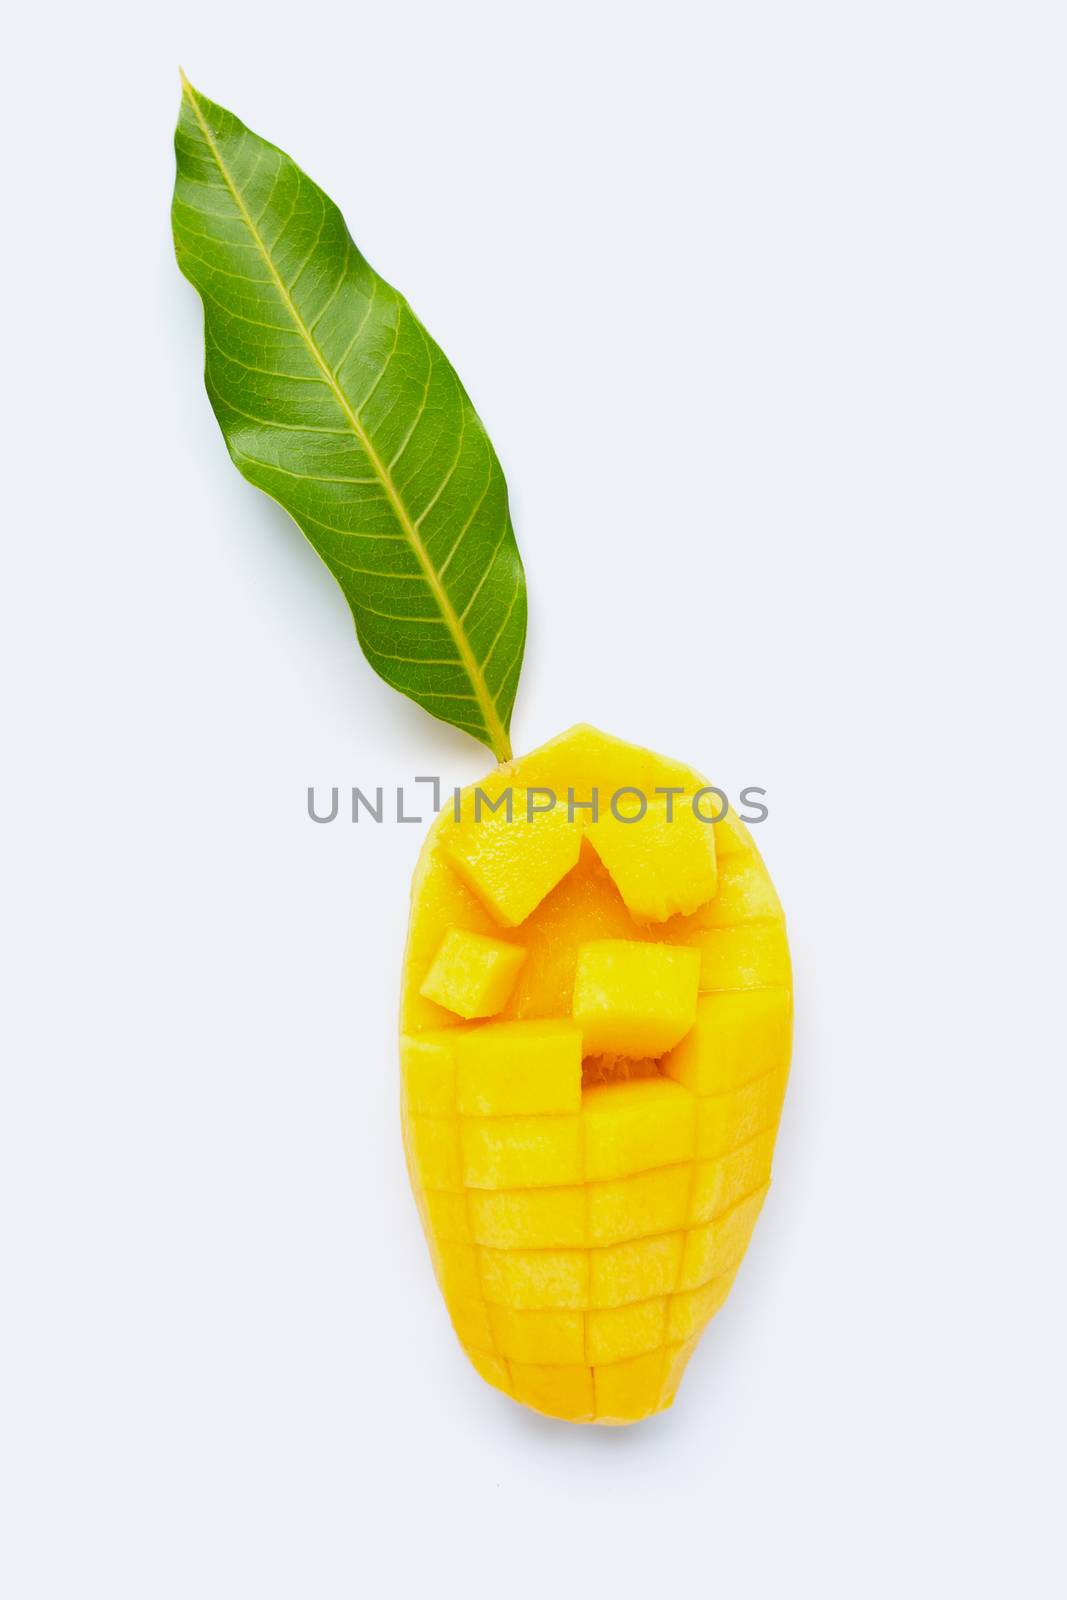 Tropical fruit, Mango  on white background.  by Bowonpat